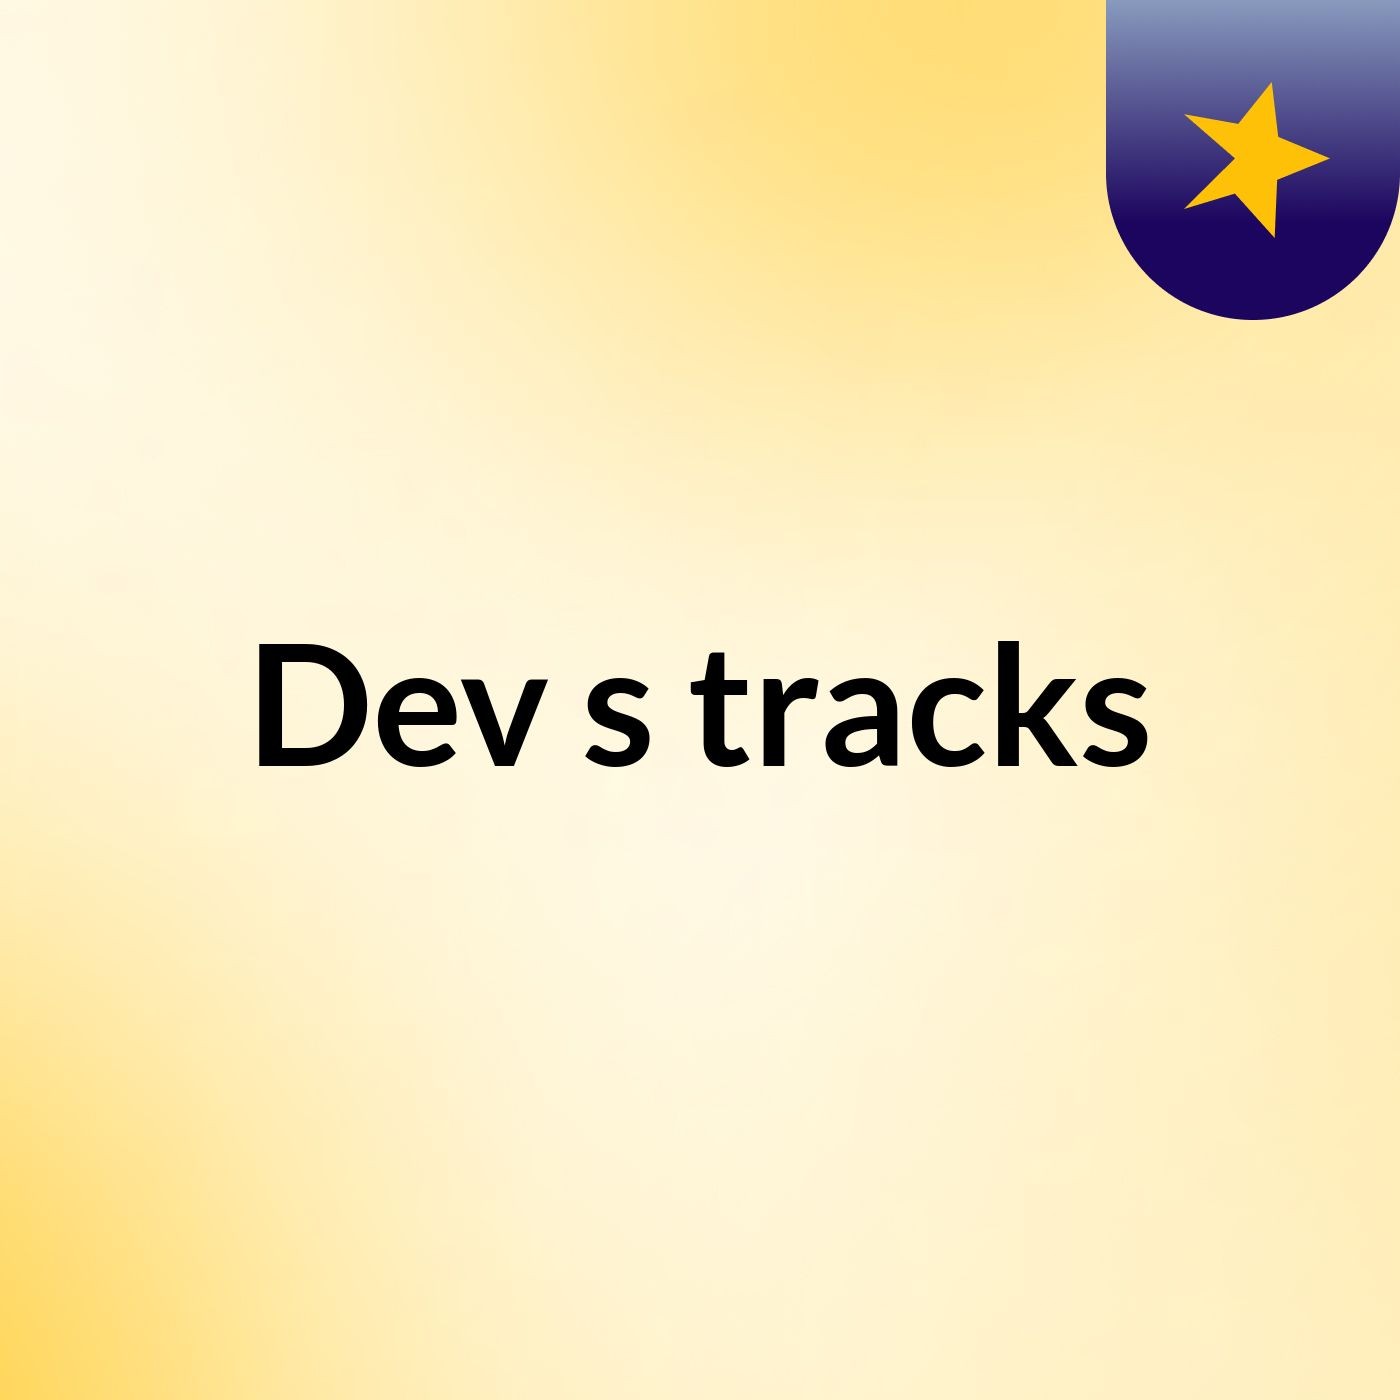 Dev's tracks